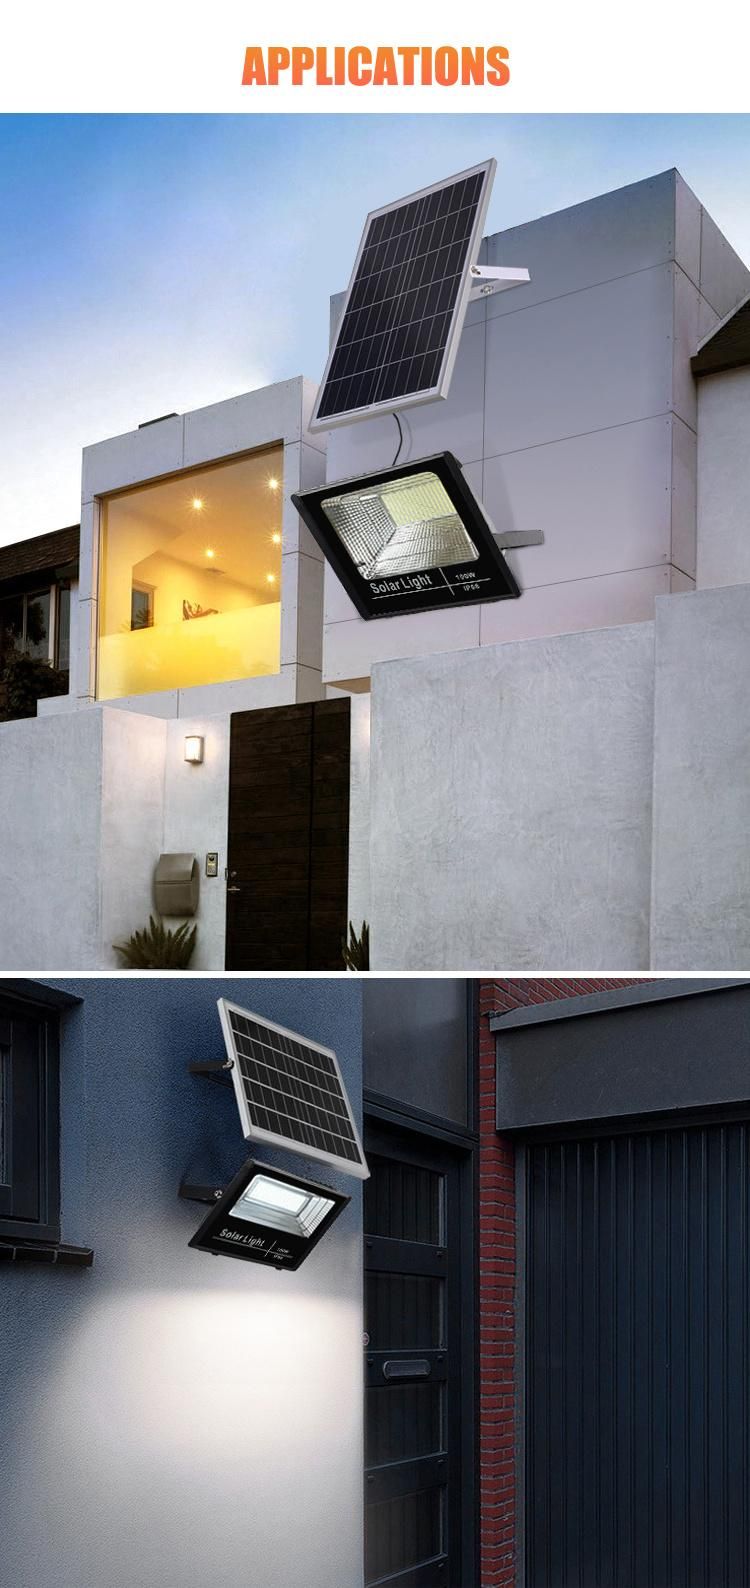 New Factory High Brightness 40W Solar Lamp Waterproof LED Solar Floodlight Solar Lamp Garden Lamp